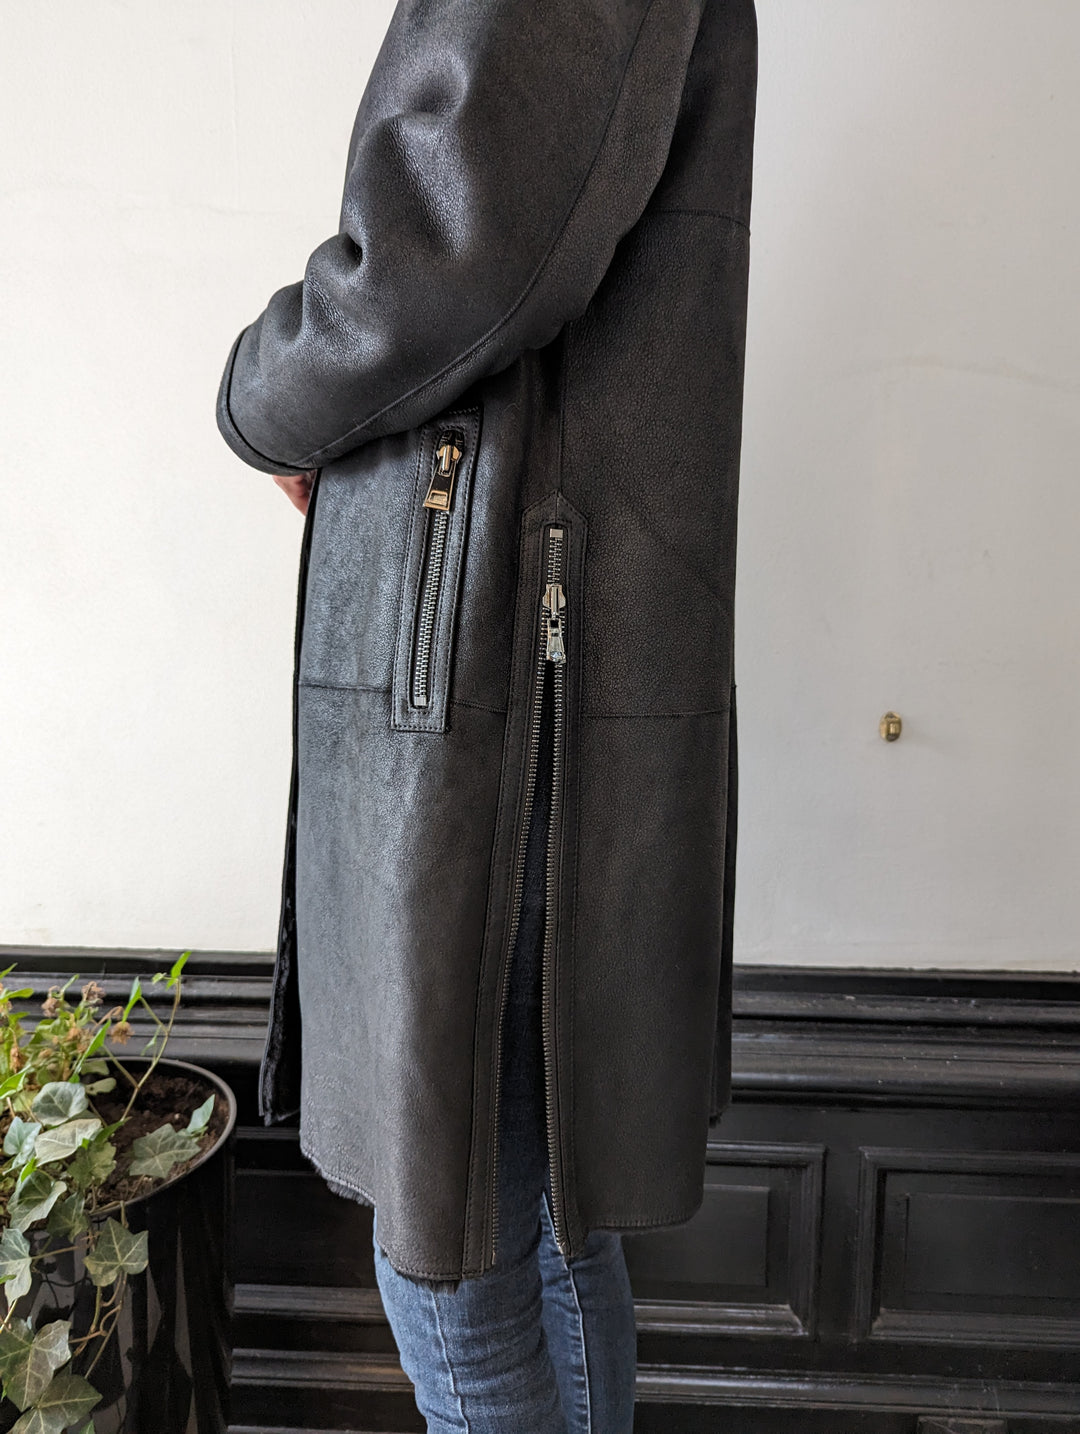 Giorgiana, 95 cm. - Collar - Shearling lamb jacket -Women - Black